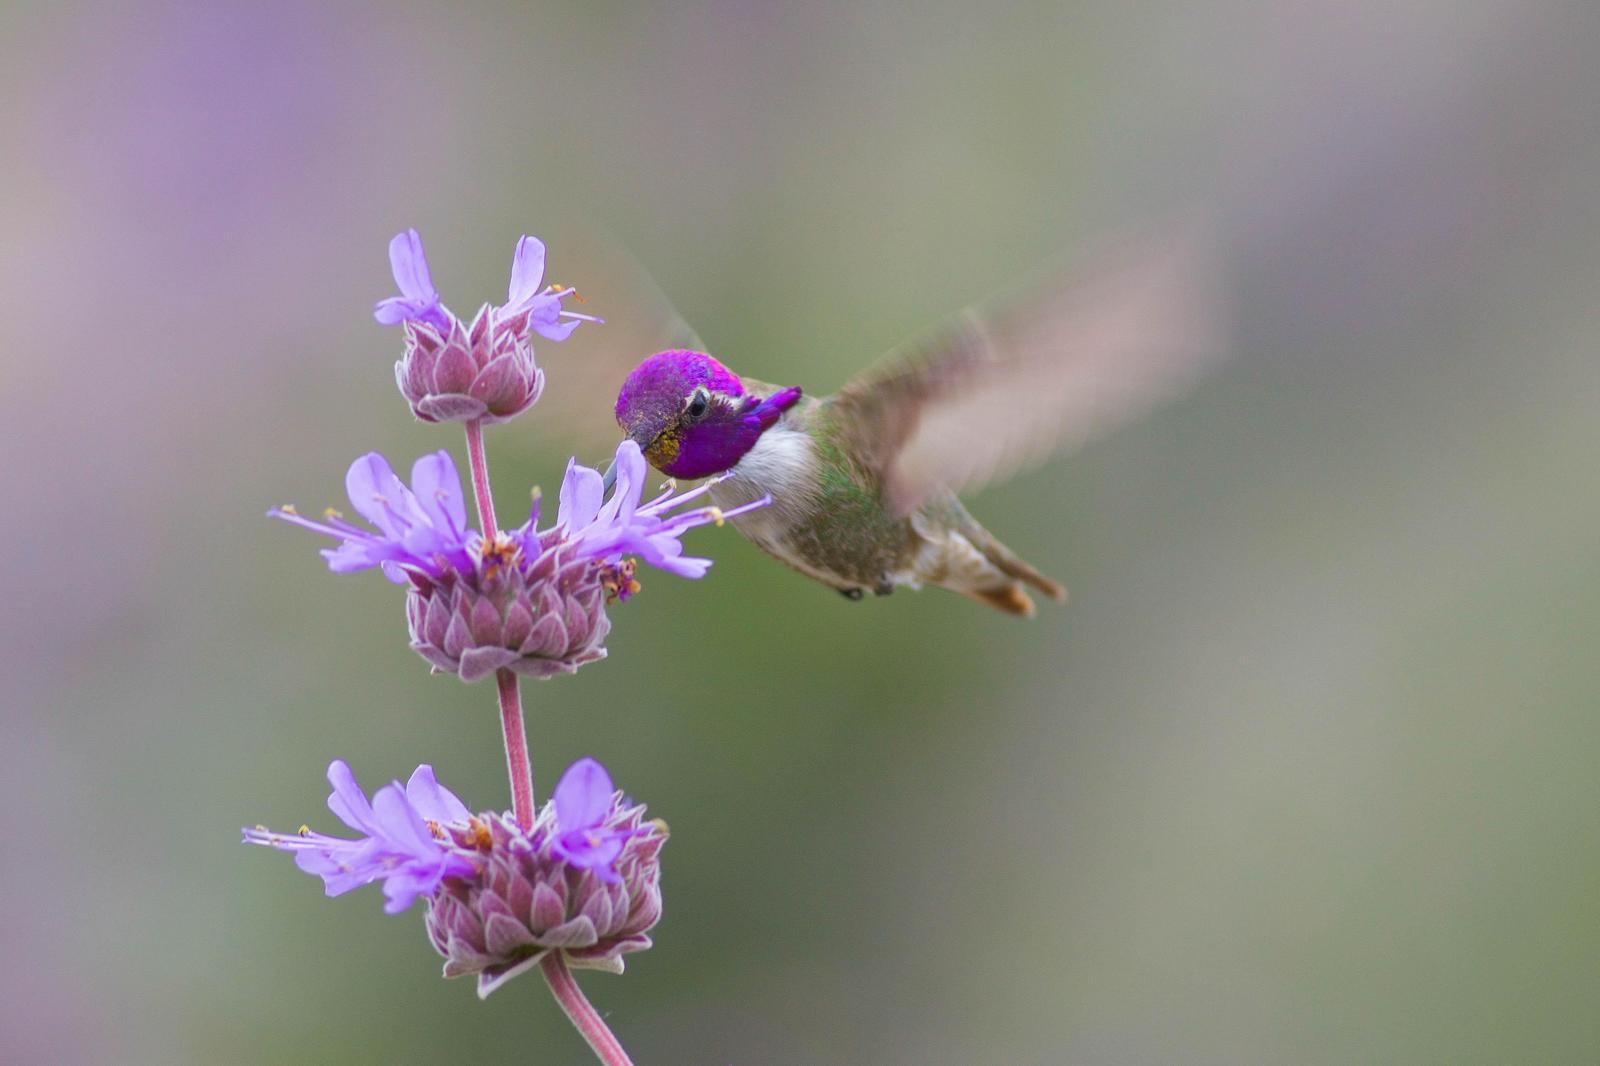 Costa's Hummingbird Photo by Tom Ford-Hutchinson